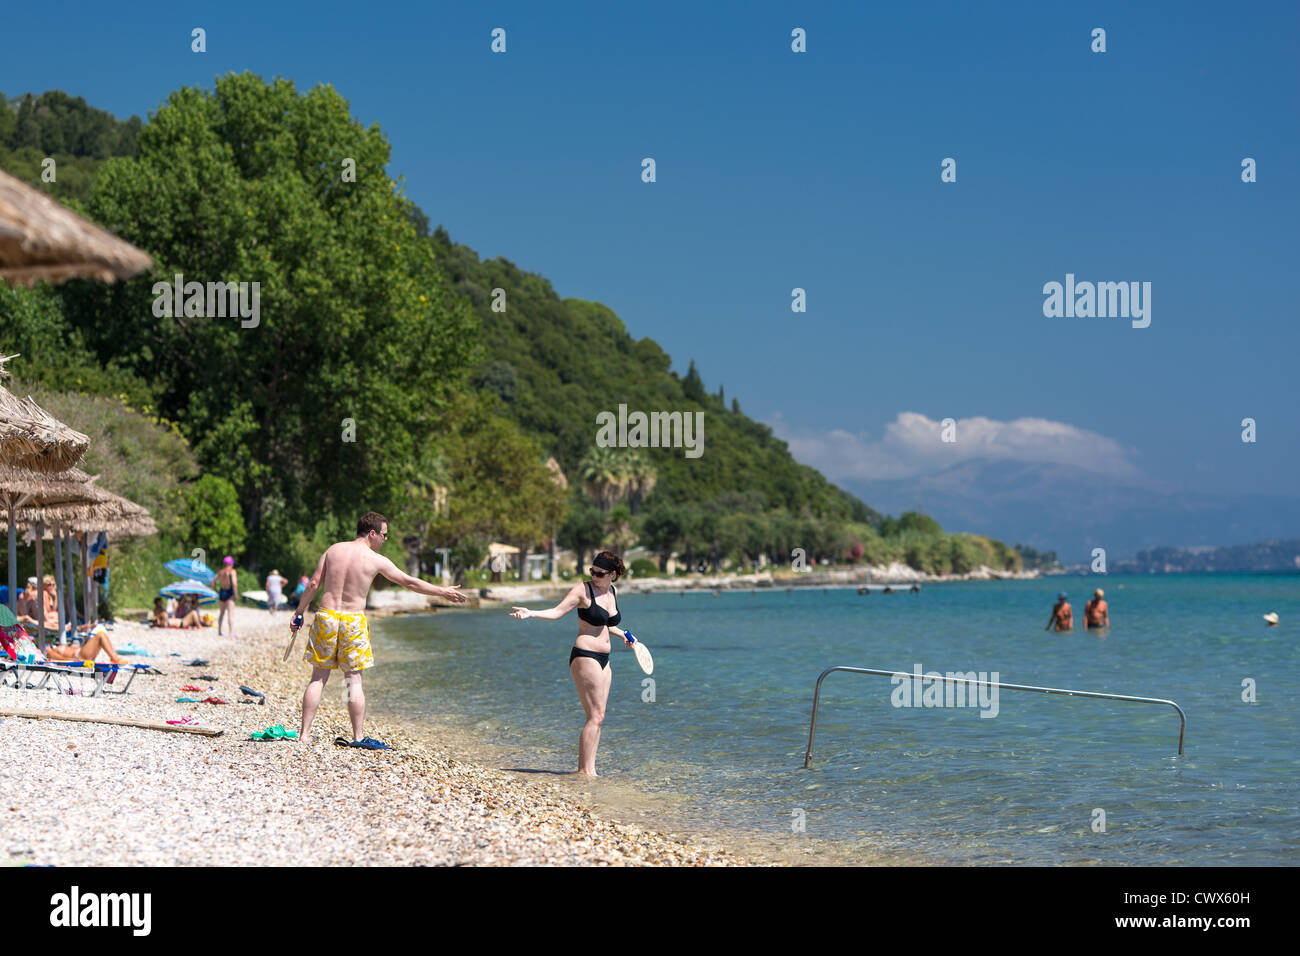 Tourists on a beach in Moraitika, Corfu, Ionian Islands, Greece. Stock Photo